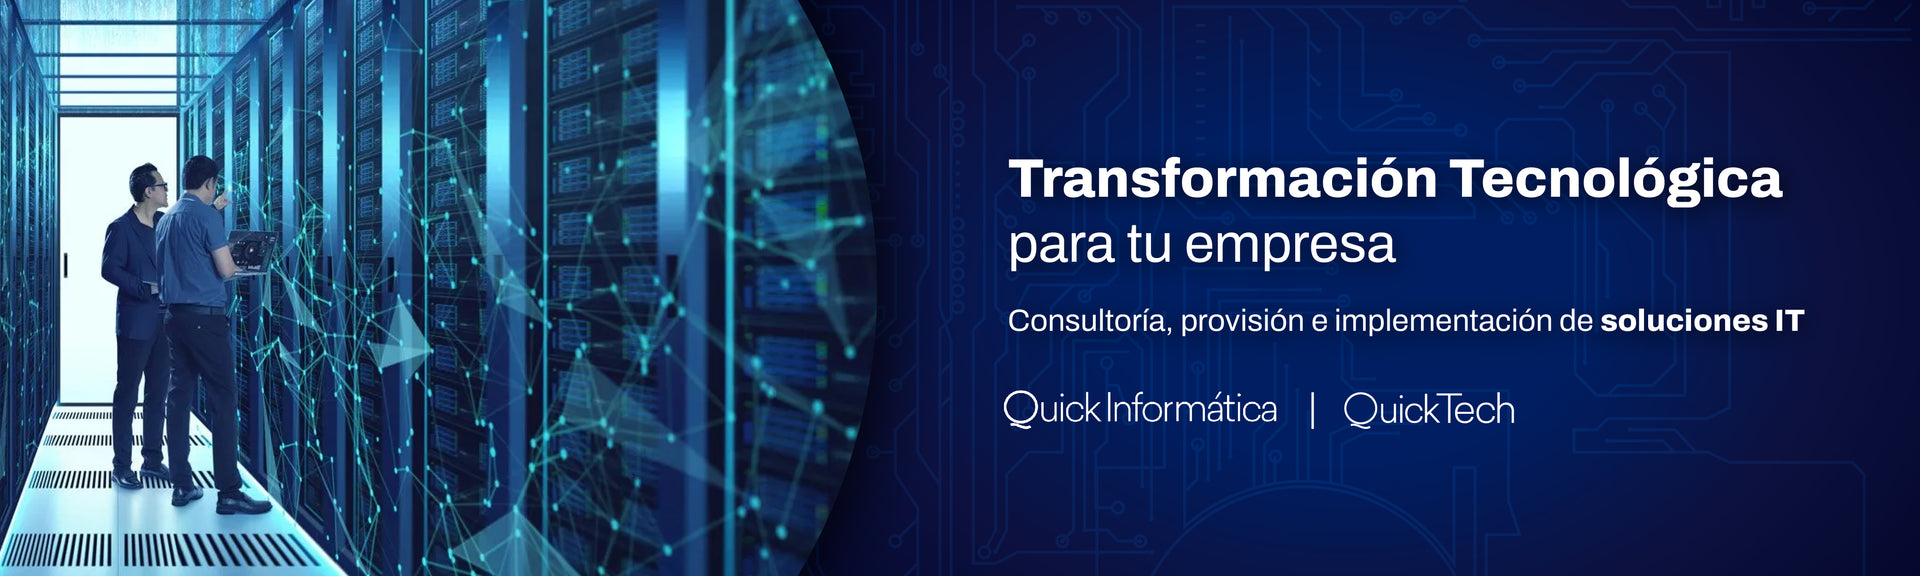 quick-informatica-transformacion-tecnologica-banner